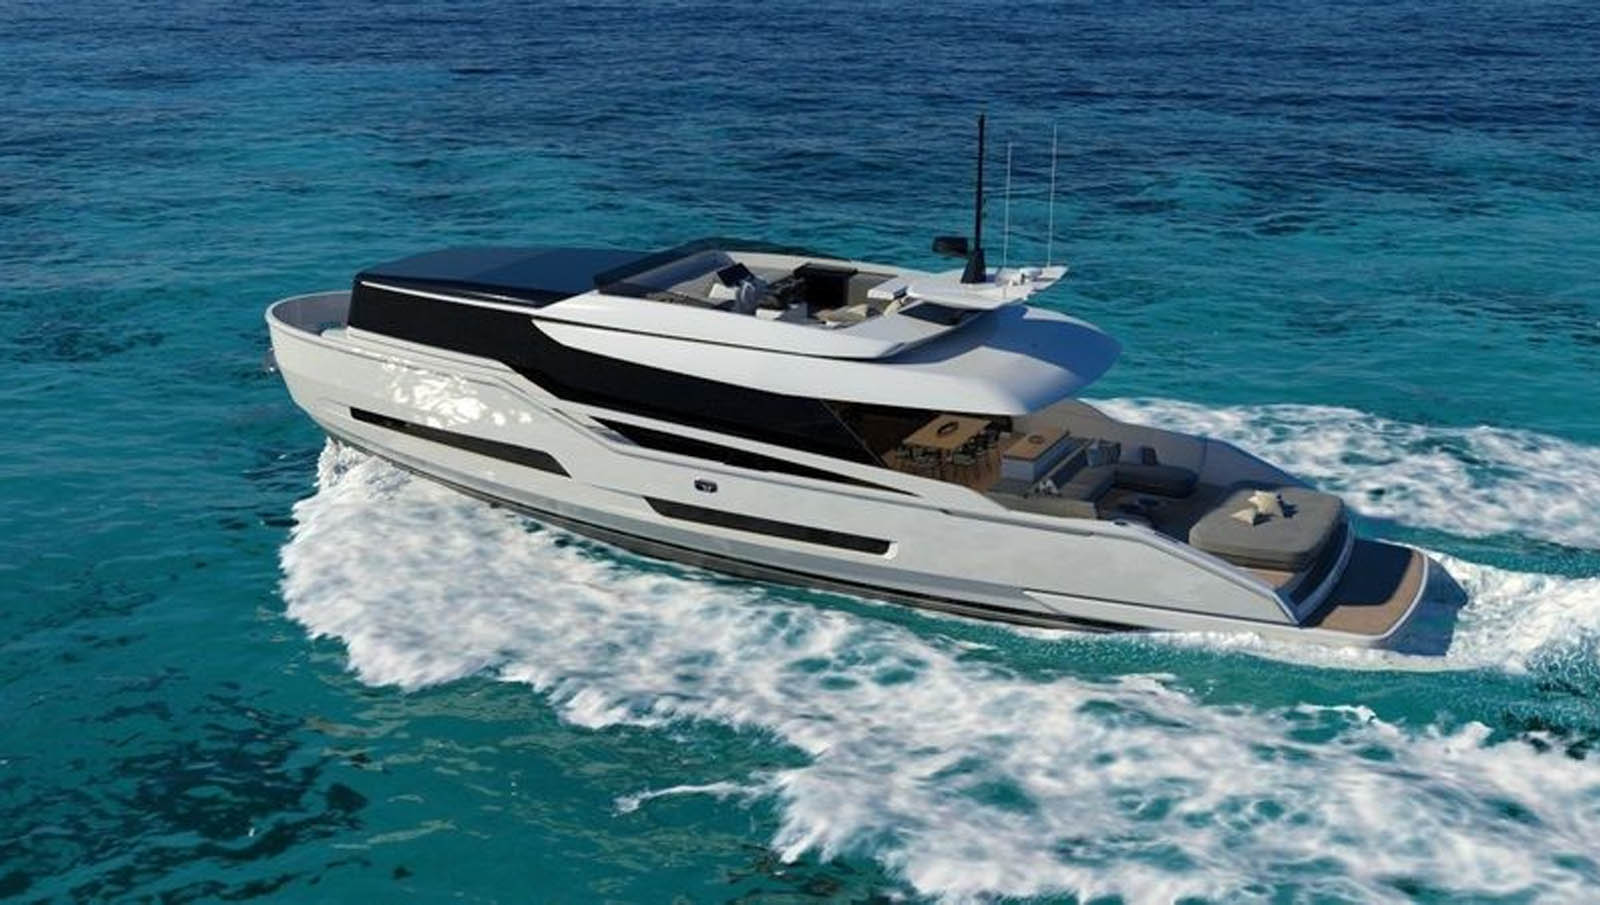 ISA Yachts entrega novo iate de 24 metros-boatshopping